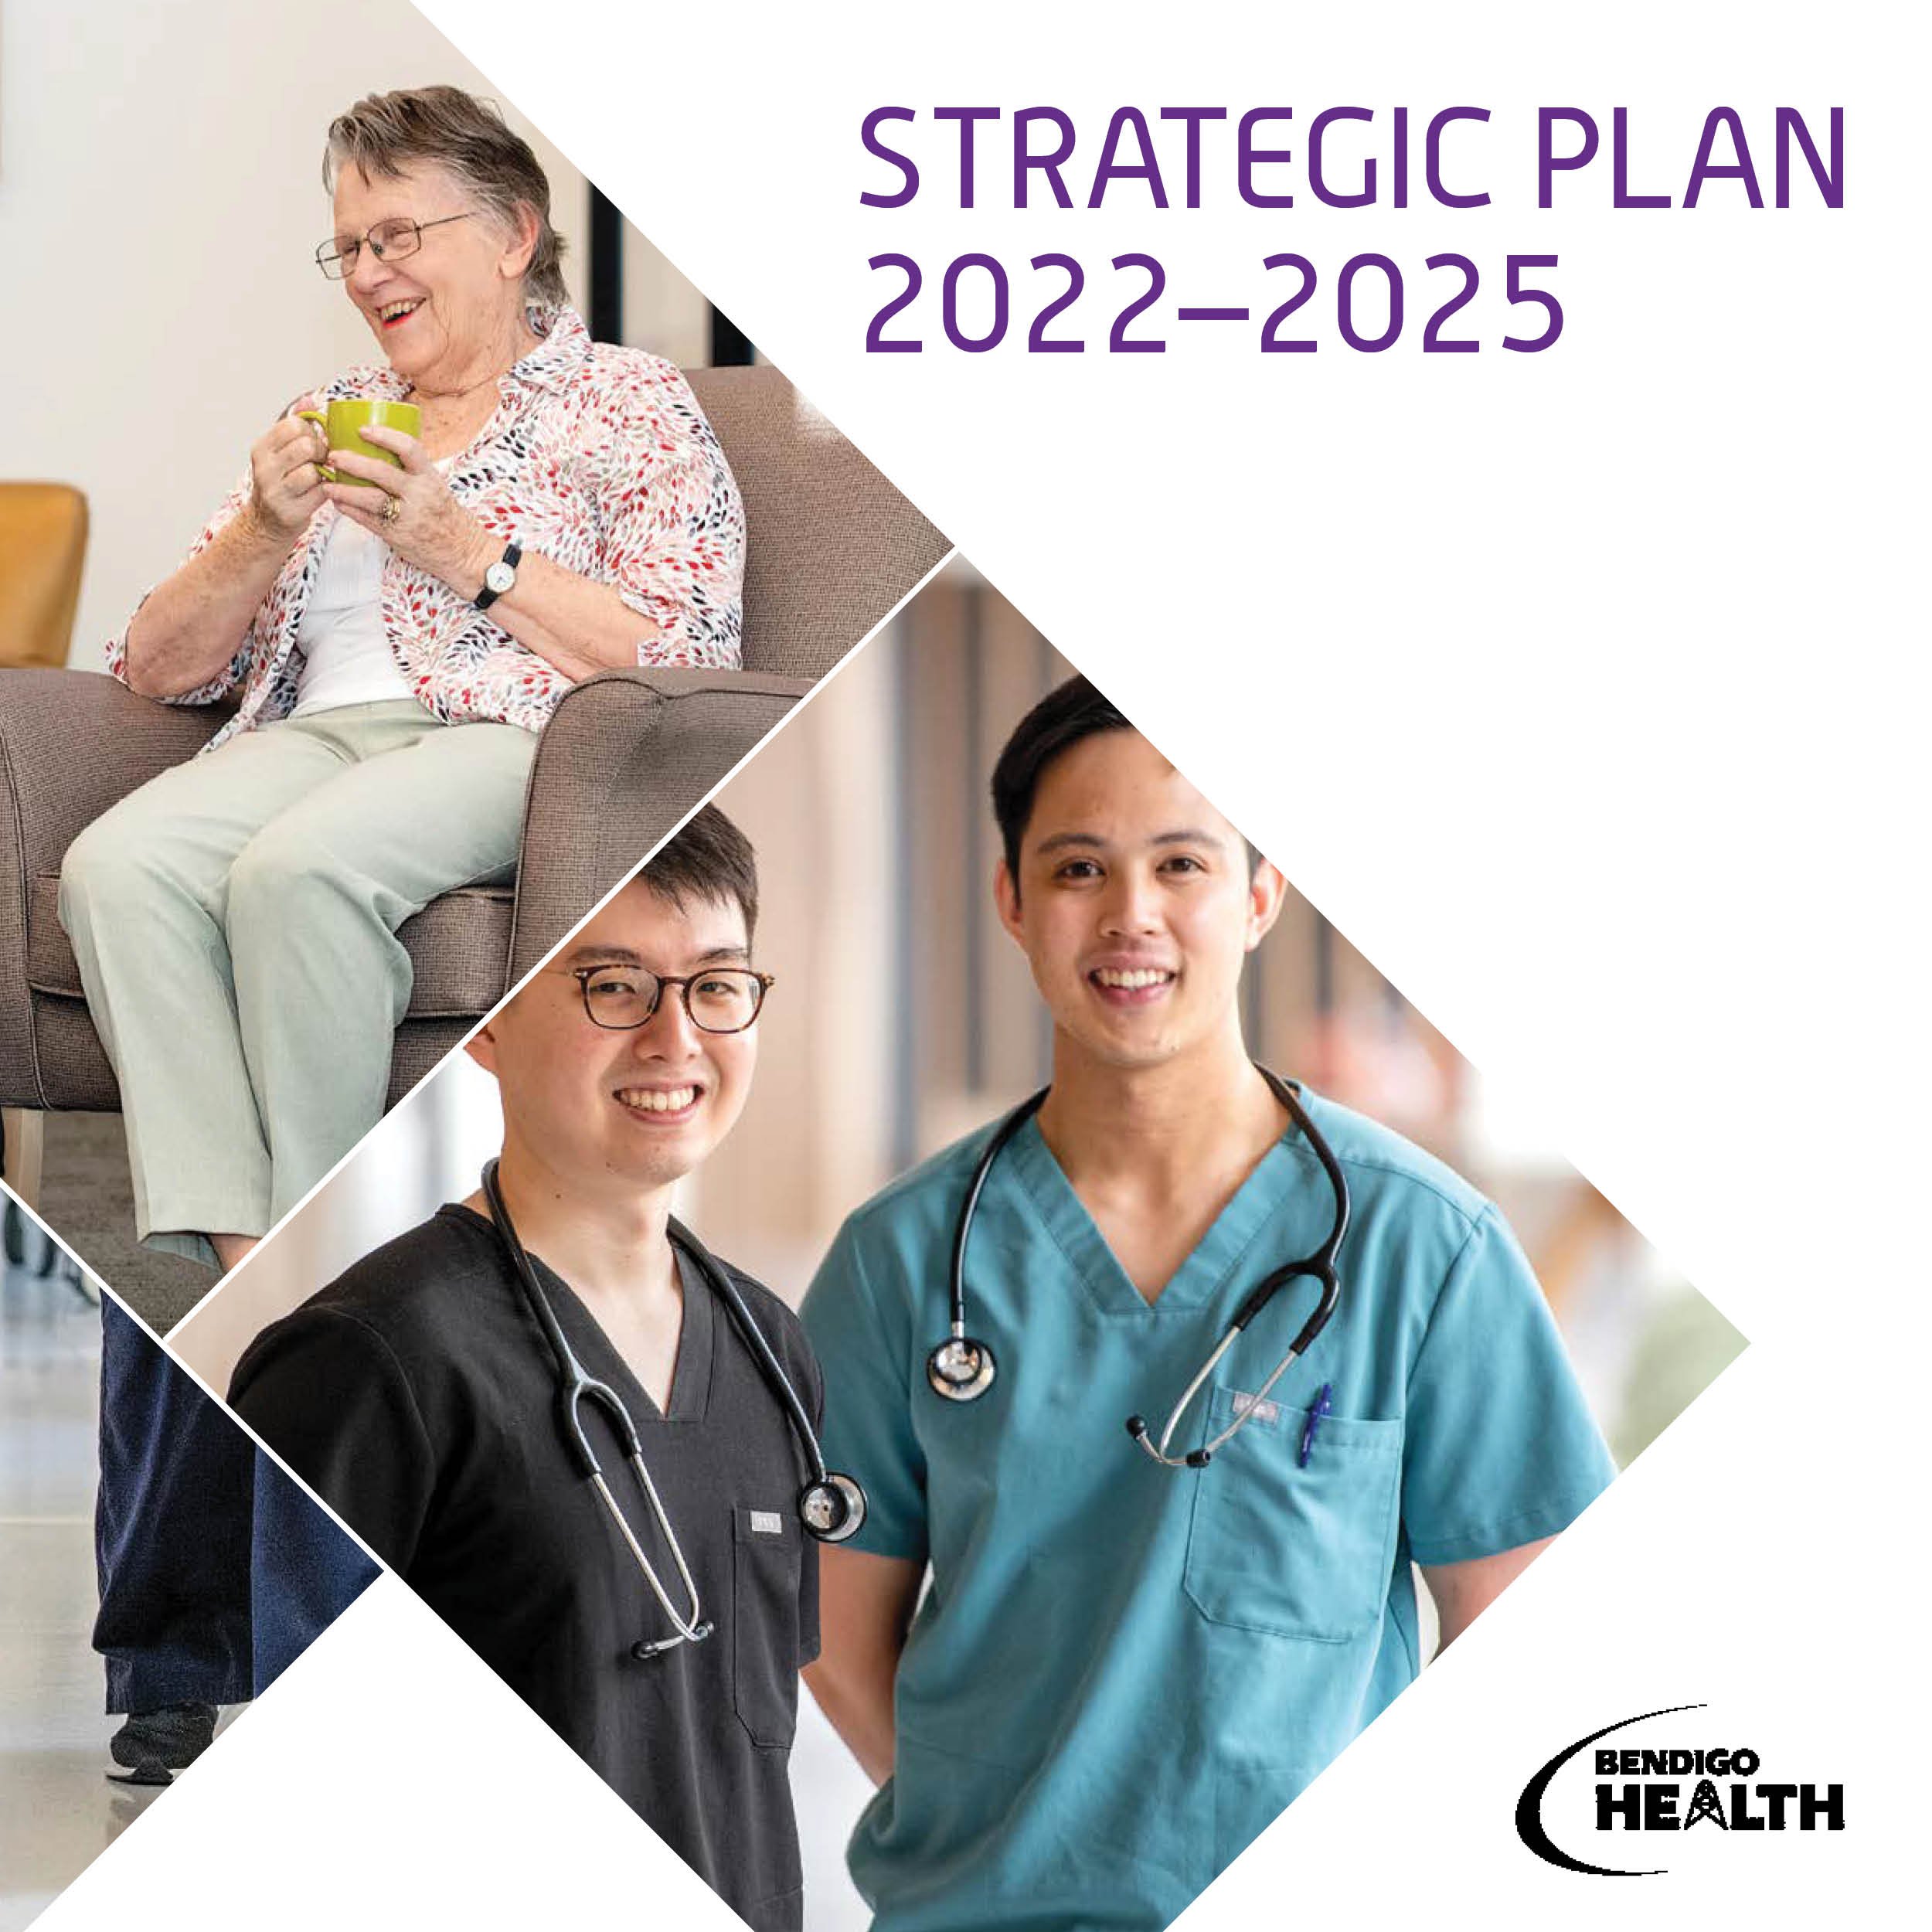 Bendigo Health Strategic Plan and marketing material